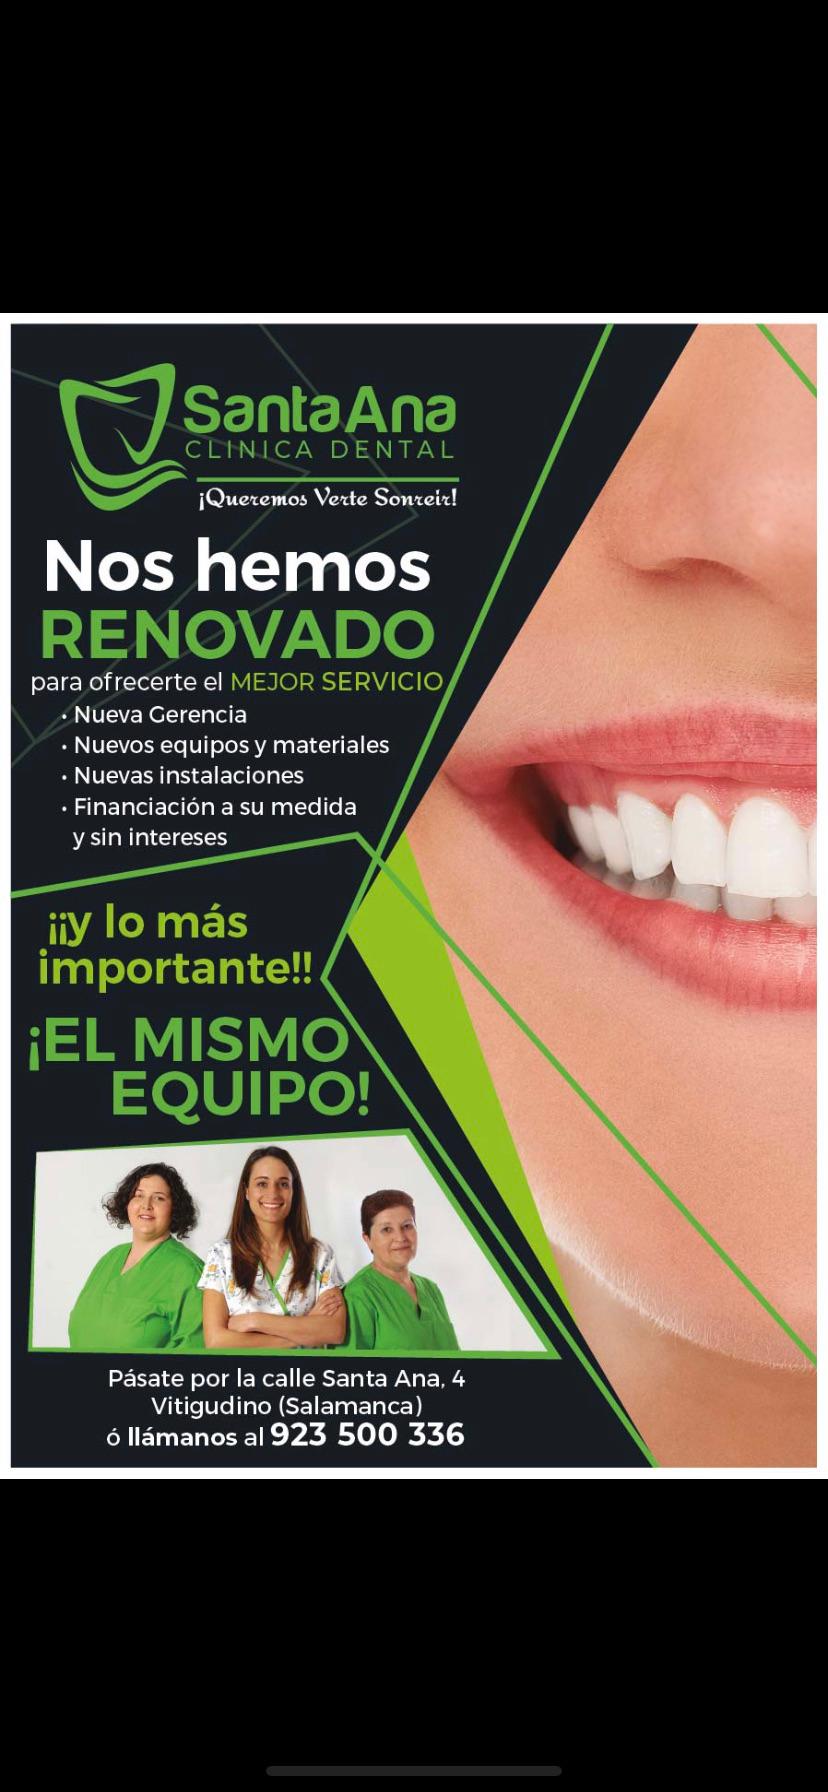 Images Clinica Dental Santa Ana